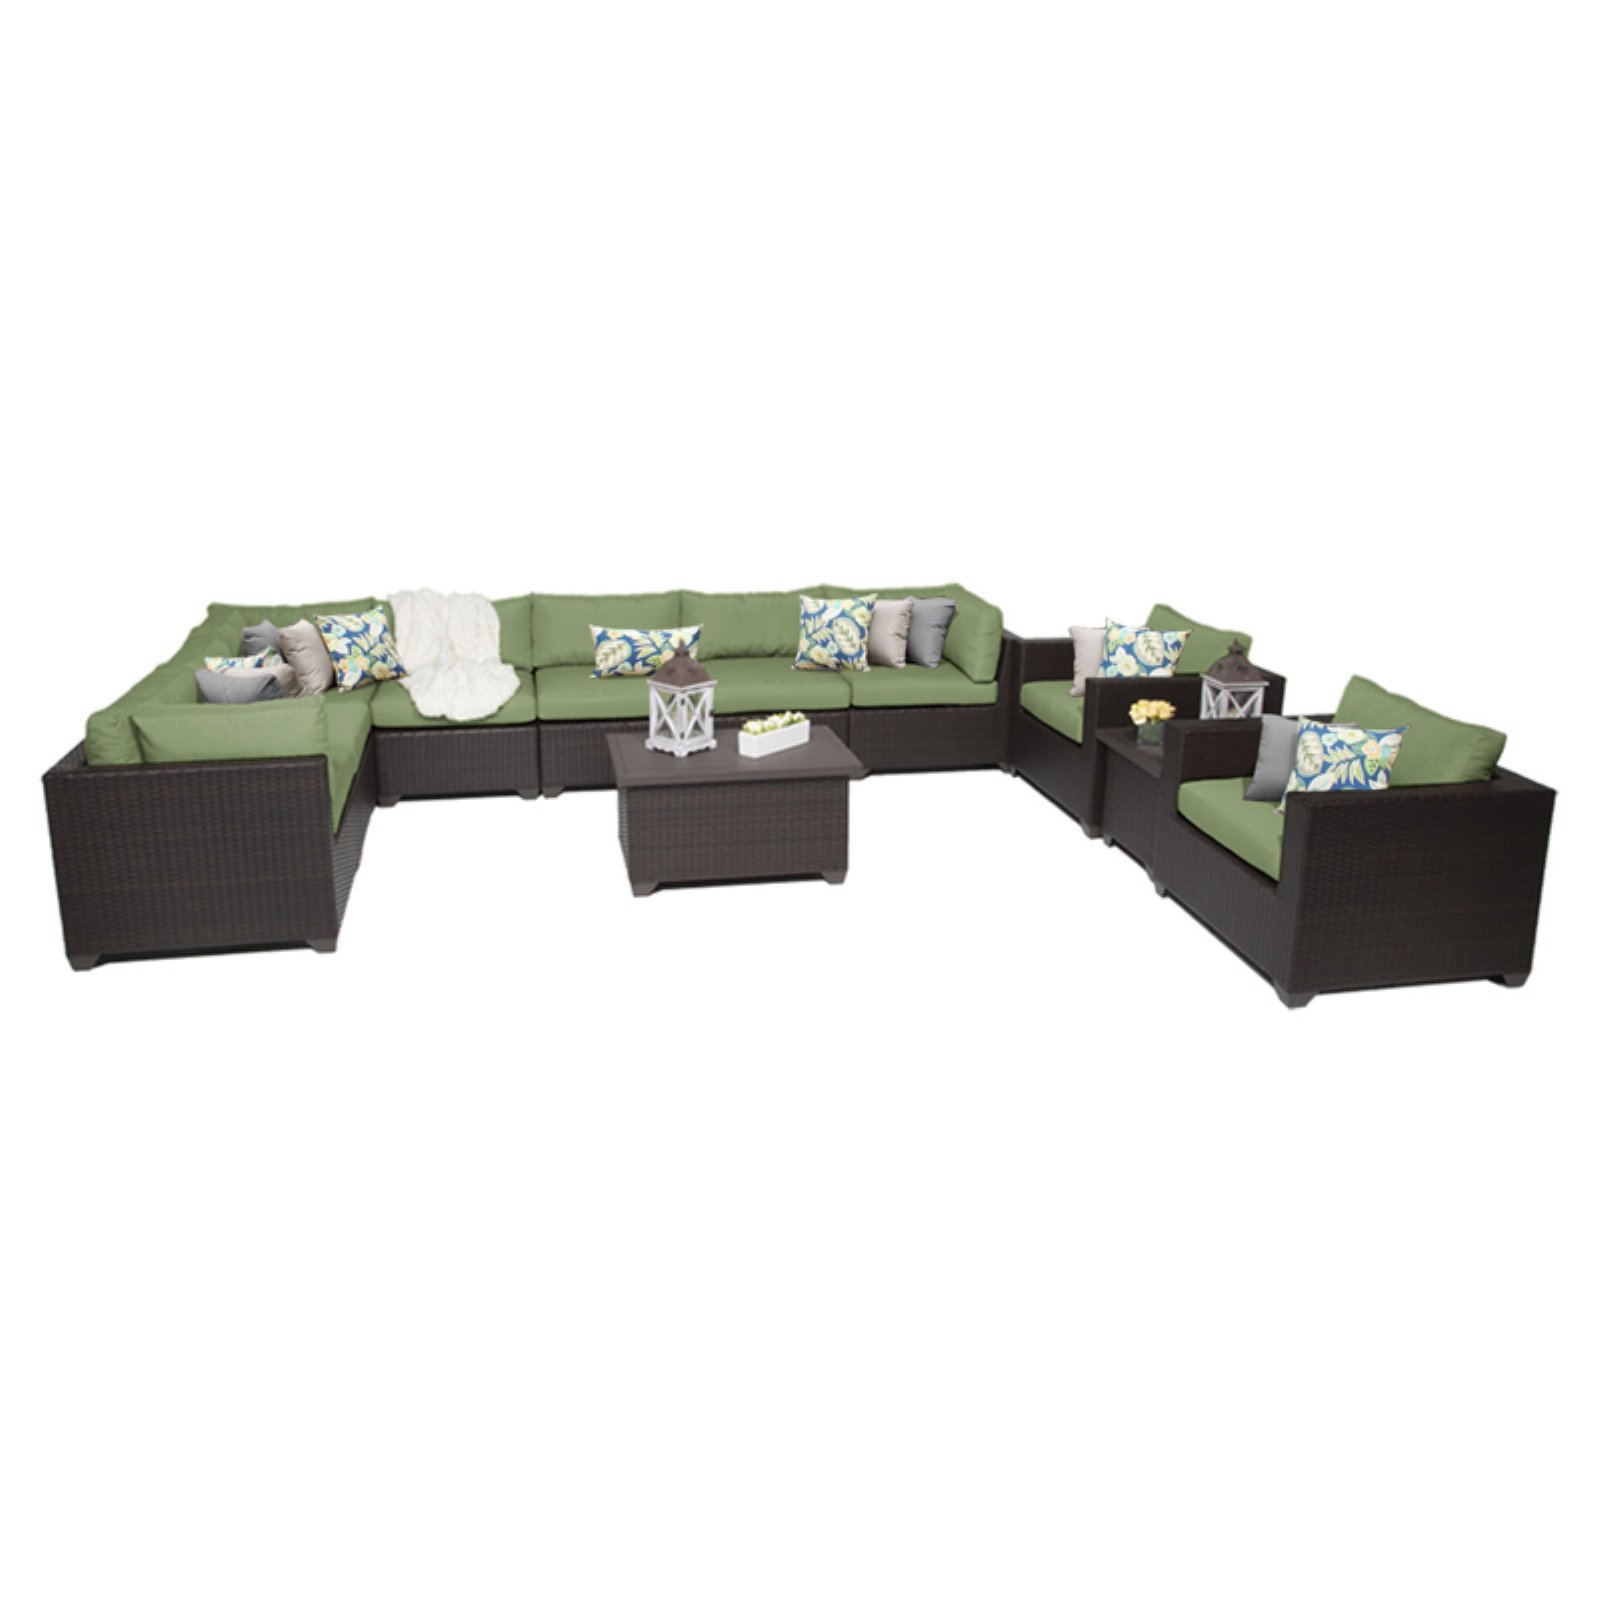 TKC Belle 11 Piece Outdoor Wicker Sofa Set in Cilantro - image 1 of 2